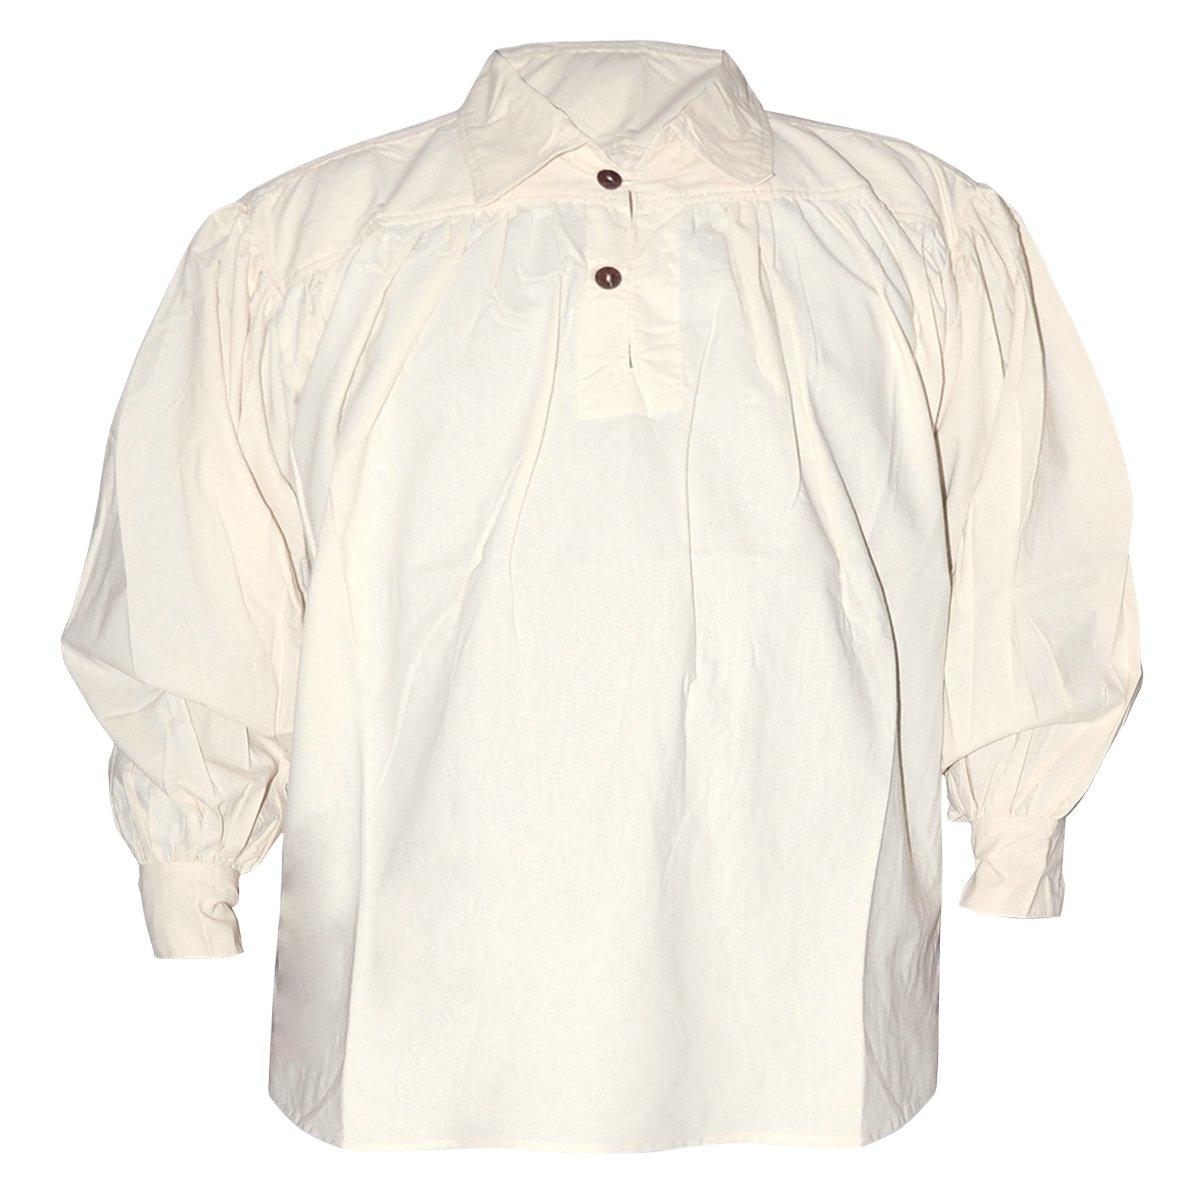 Cotton Shirt, Collared, Button Neck, Natural, Size XL